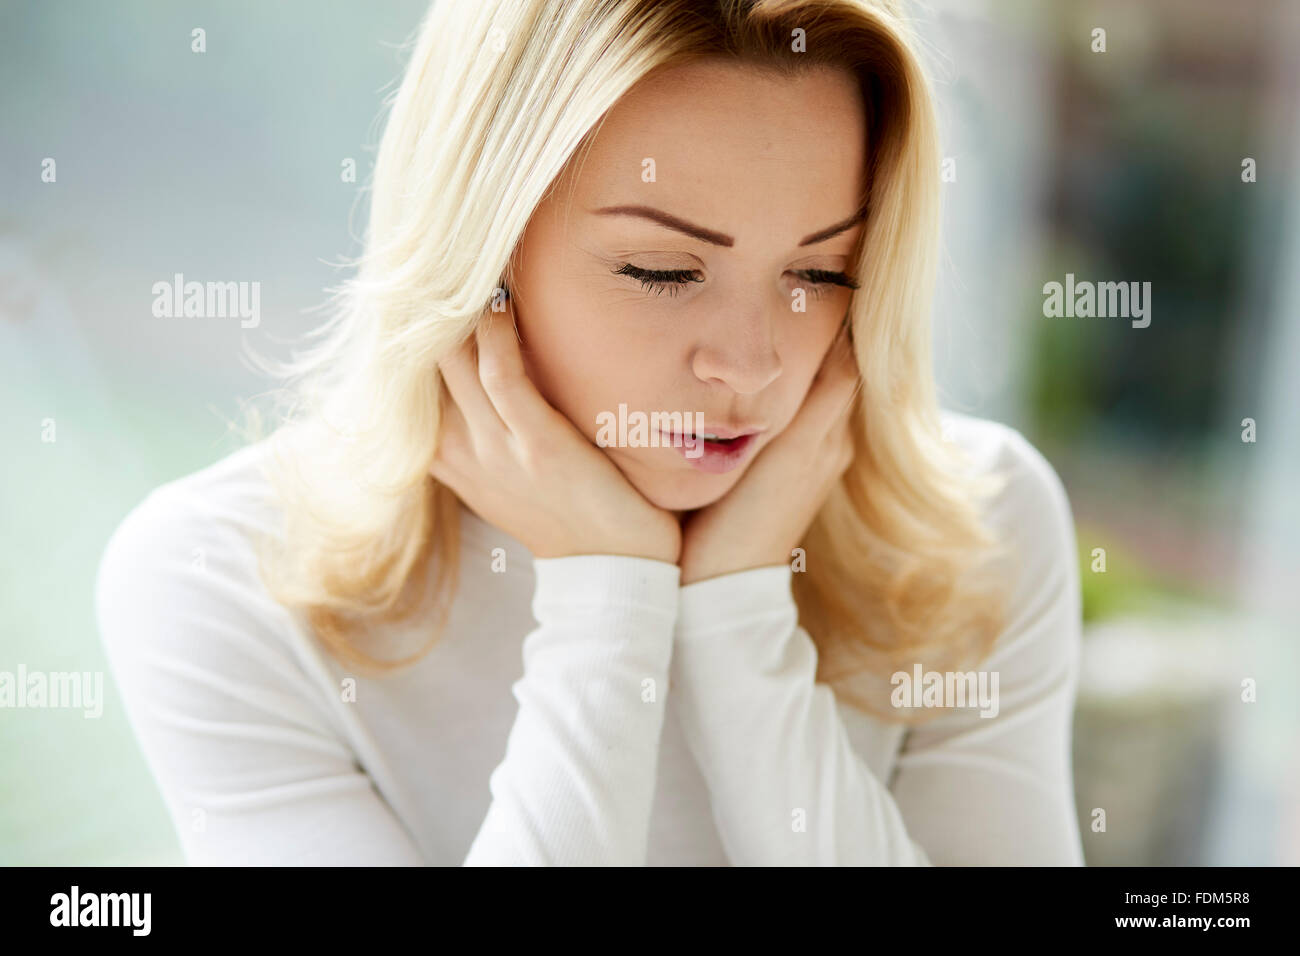 Woman looking anxious Stock Photo